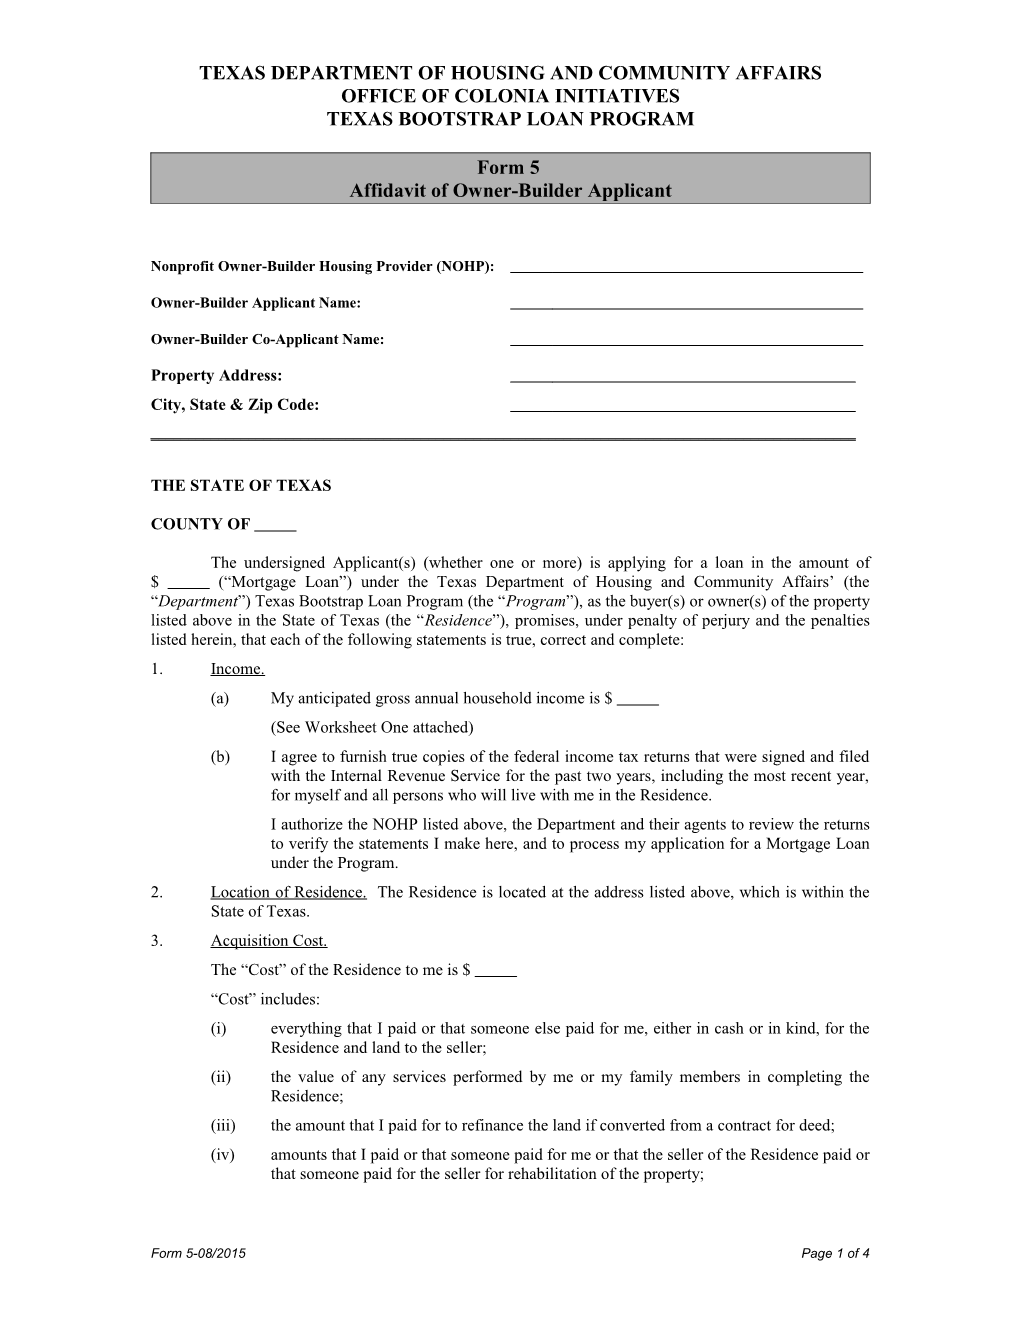 Form 5 Affidavit of Applicant